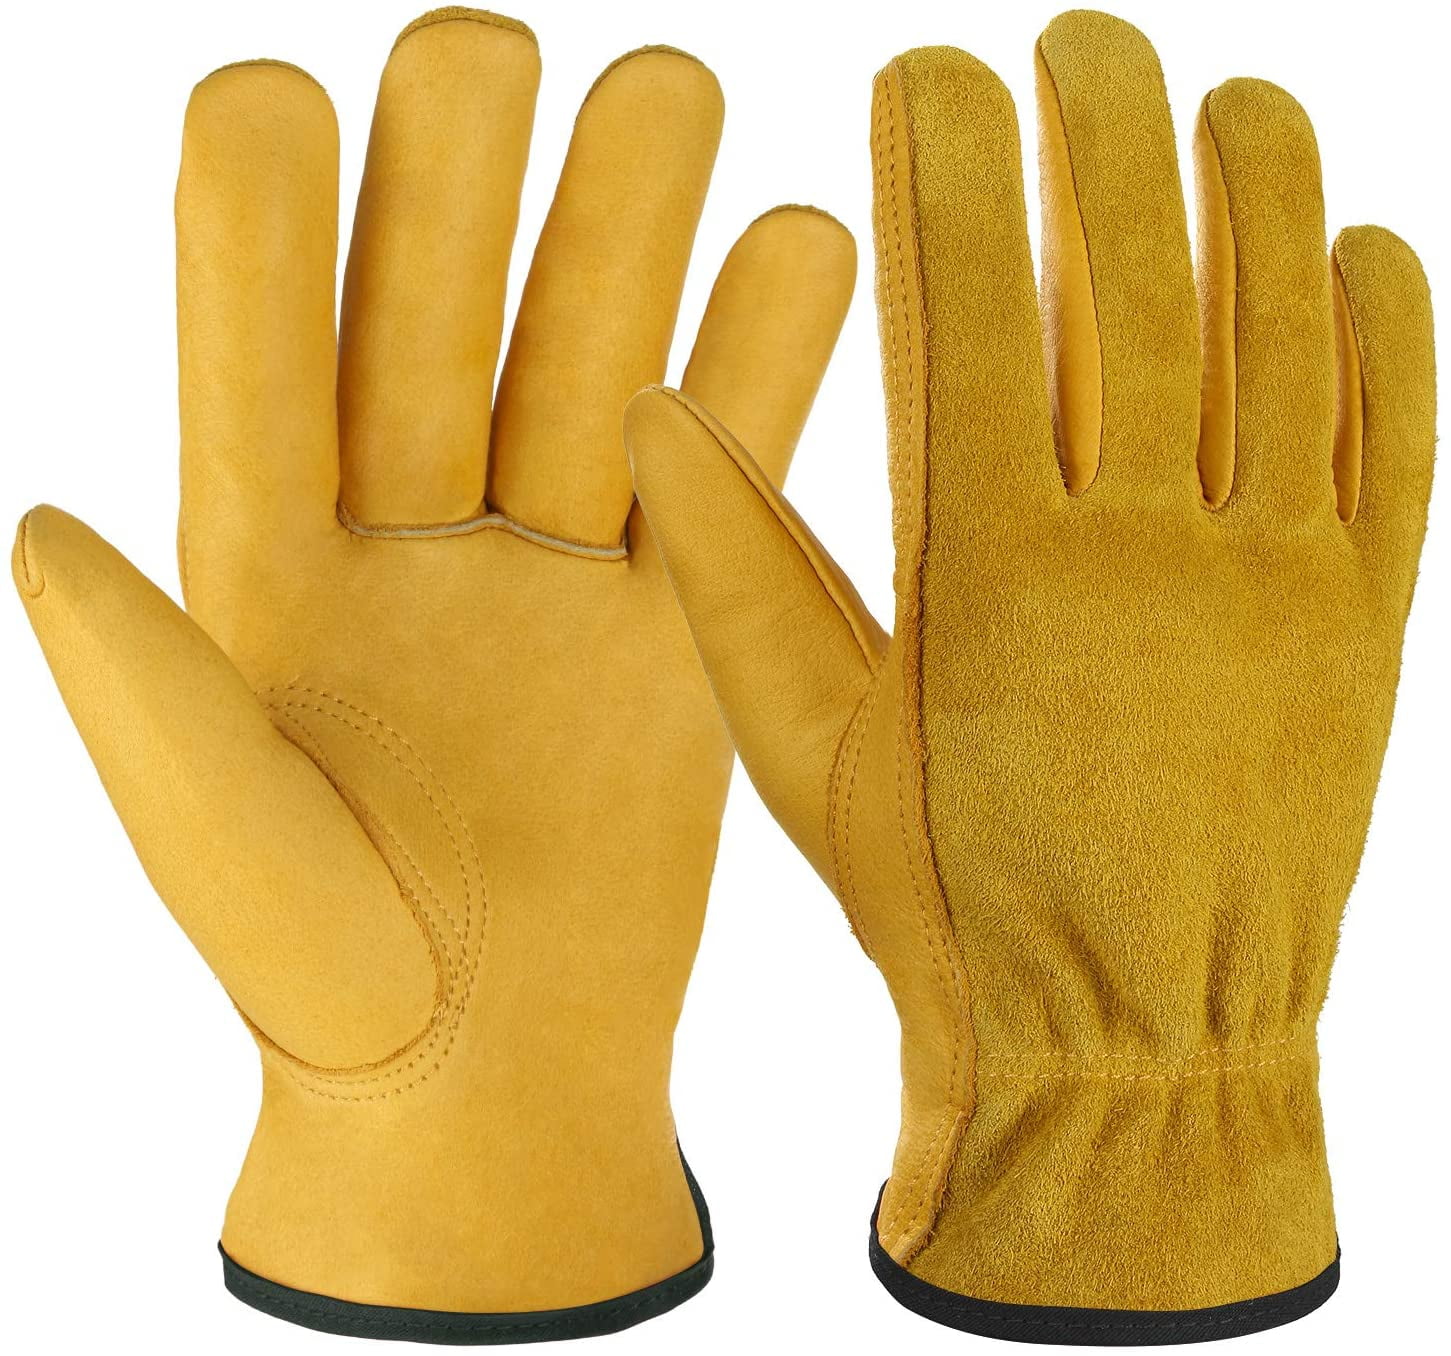 1/2 Pairs Leather Working Garden Labor Laundry Industrial Work Gloves Uniex Safe 